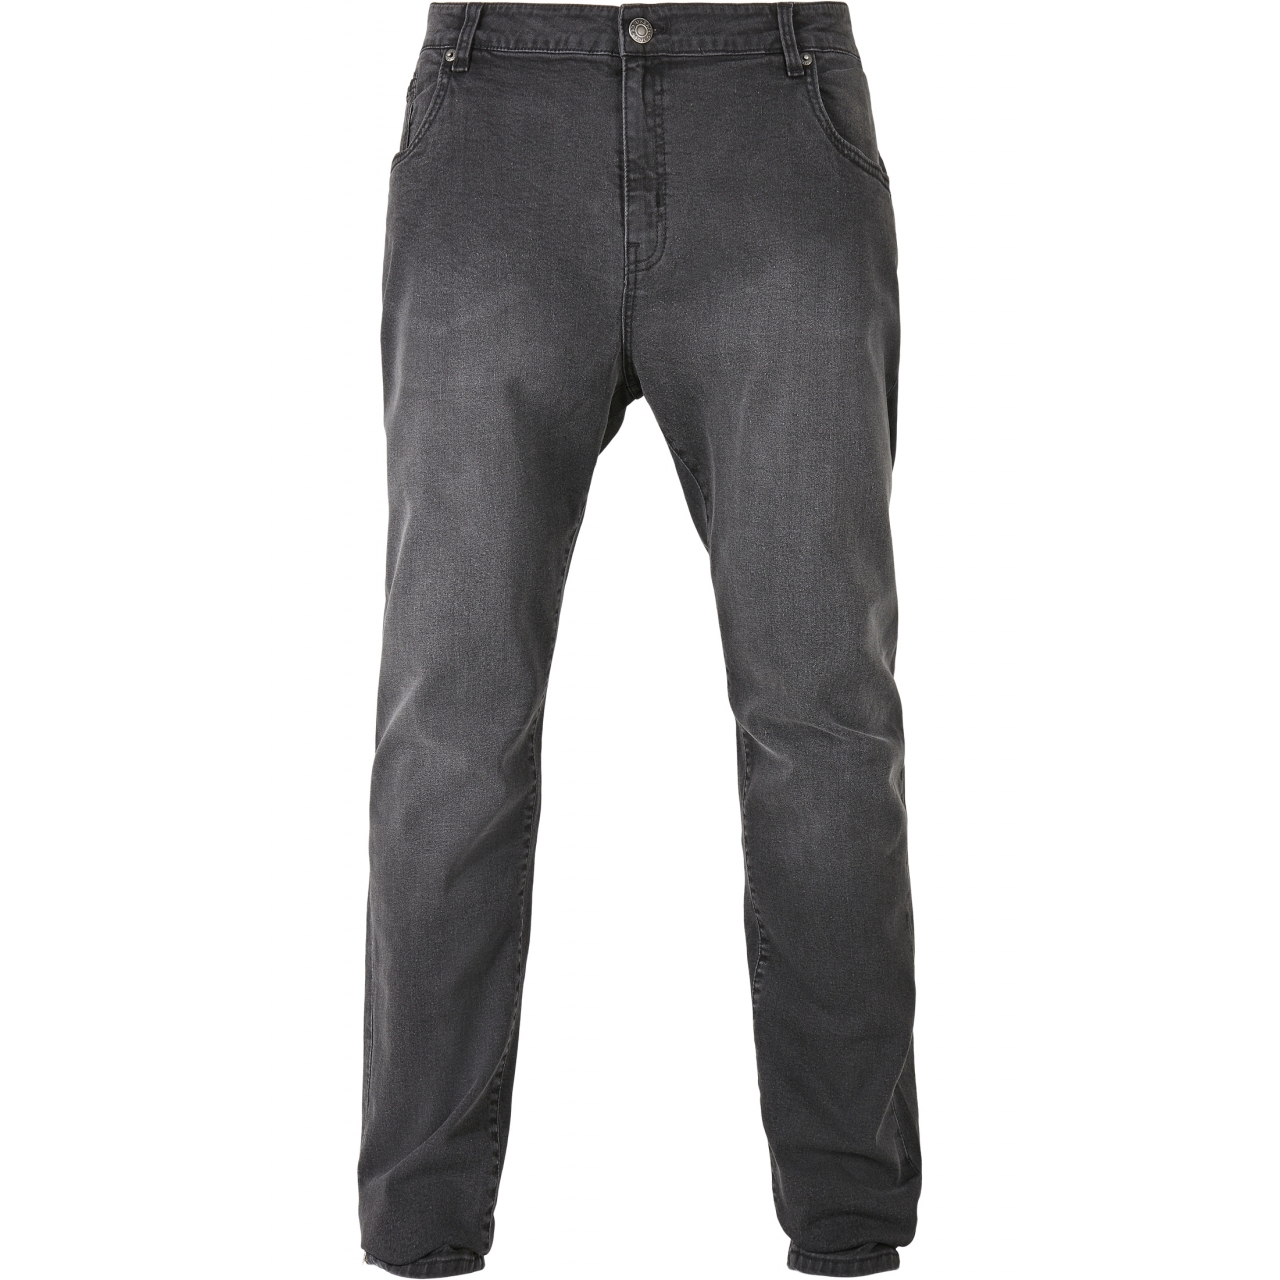 Džíny Urban Classics Slim Fit Zip Jeans - černé, 29/32